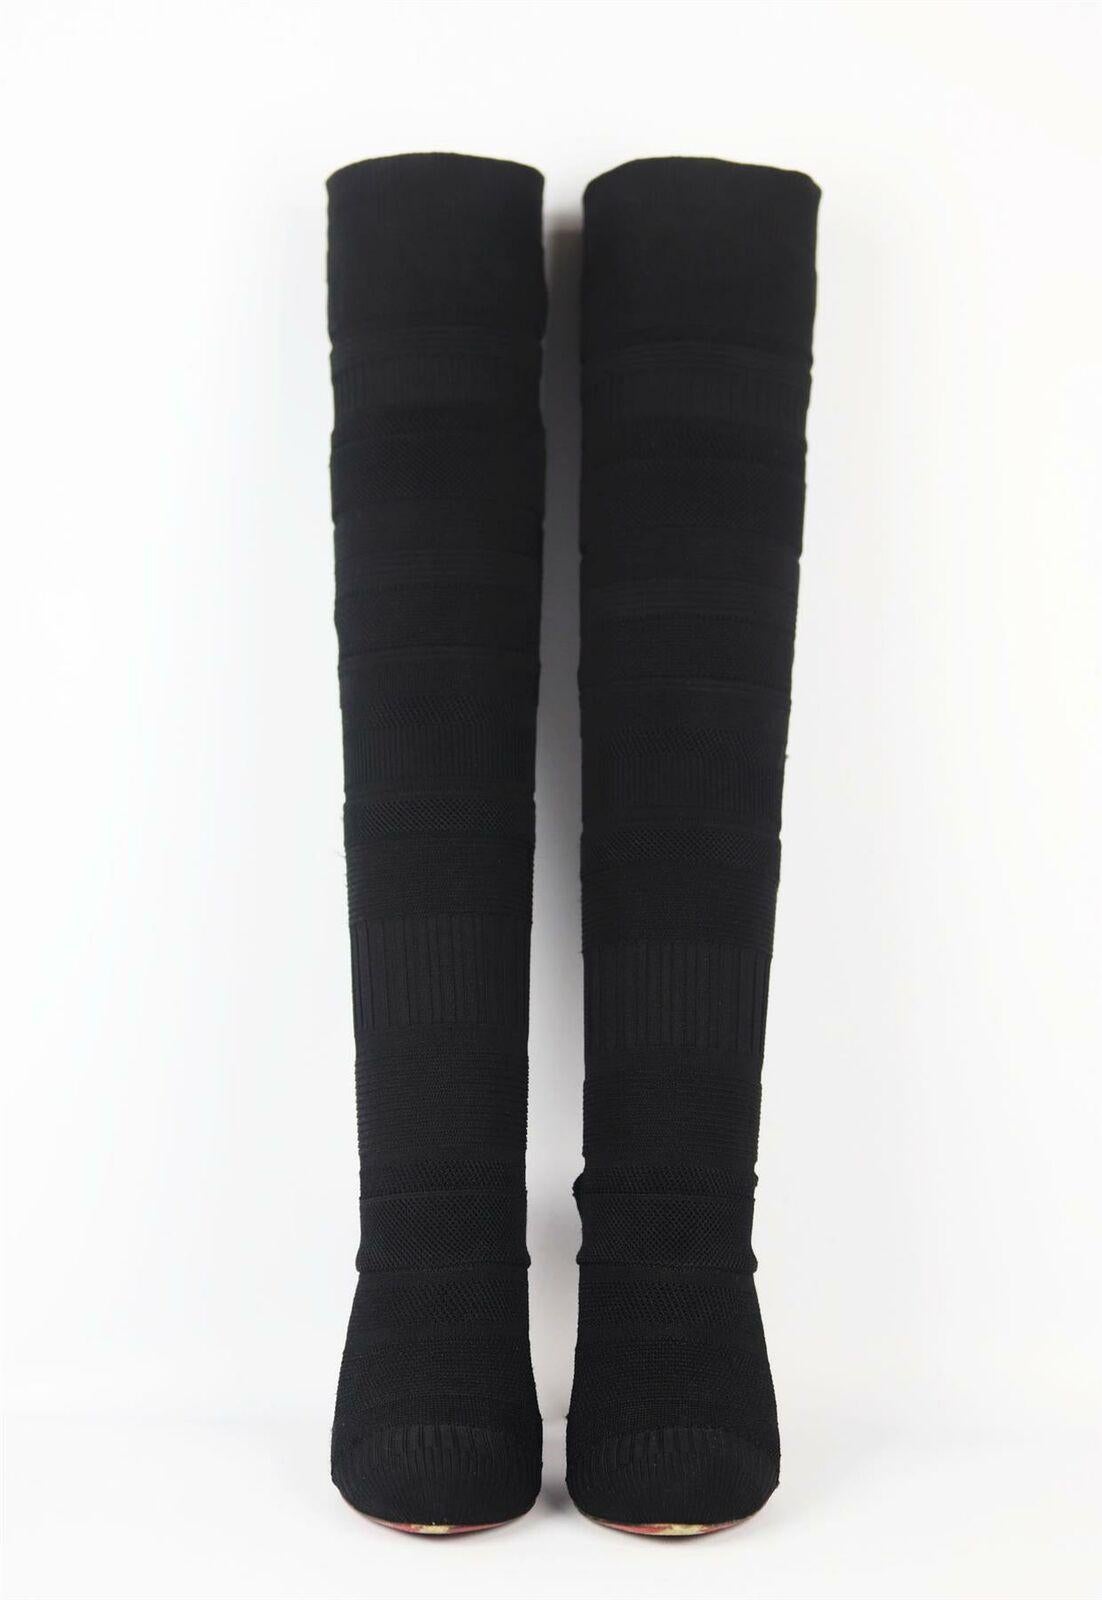 Black Christian Louboutin Knee High Cutout Stretch Knit Boots